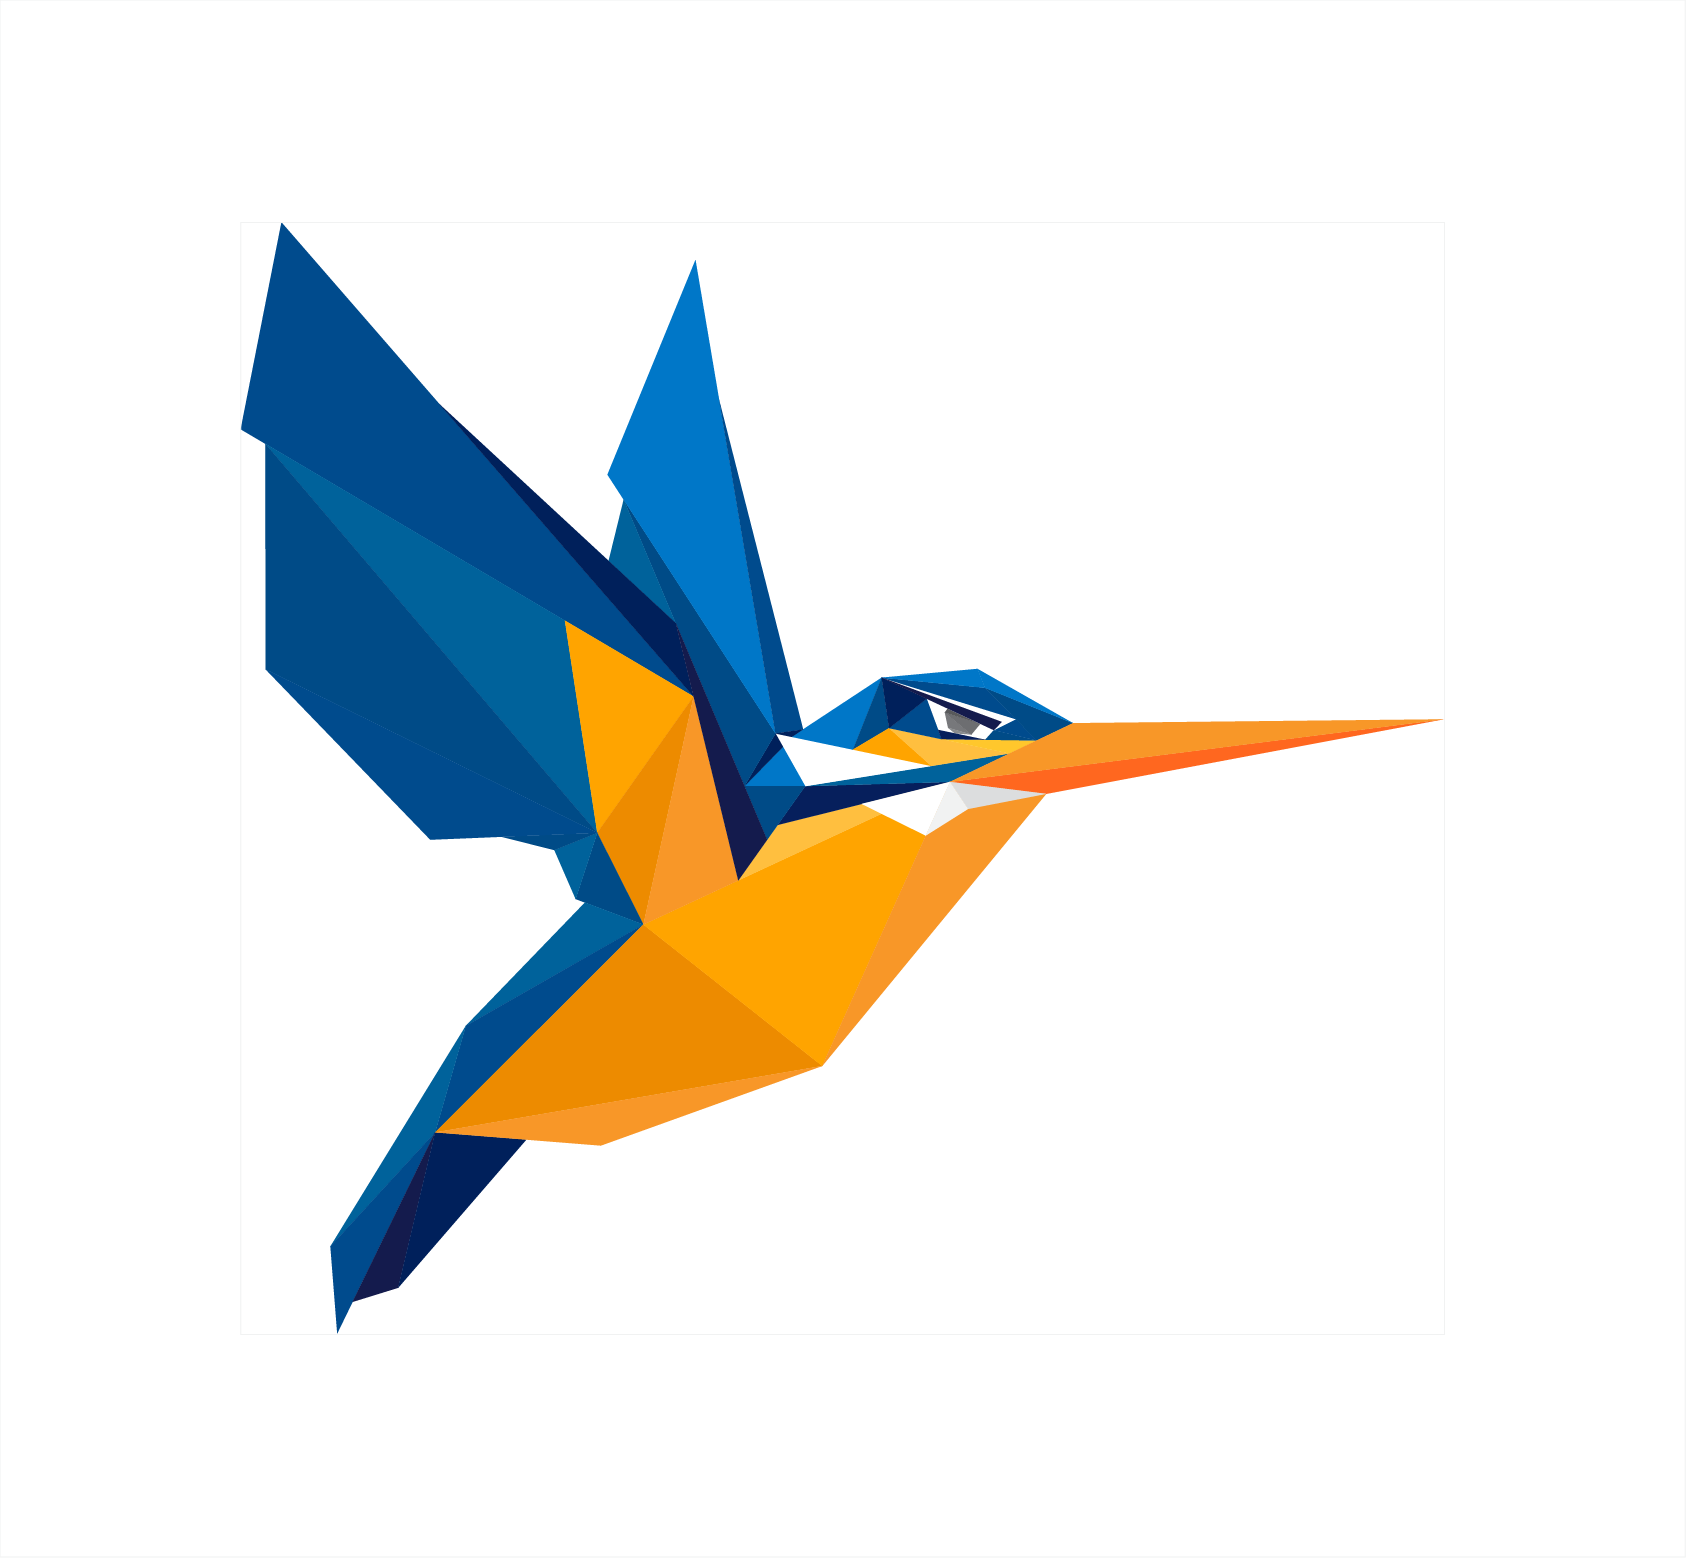 Kingfisher by Tianithen Kingf